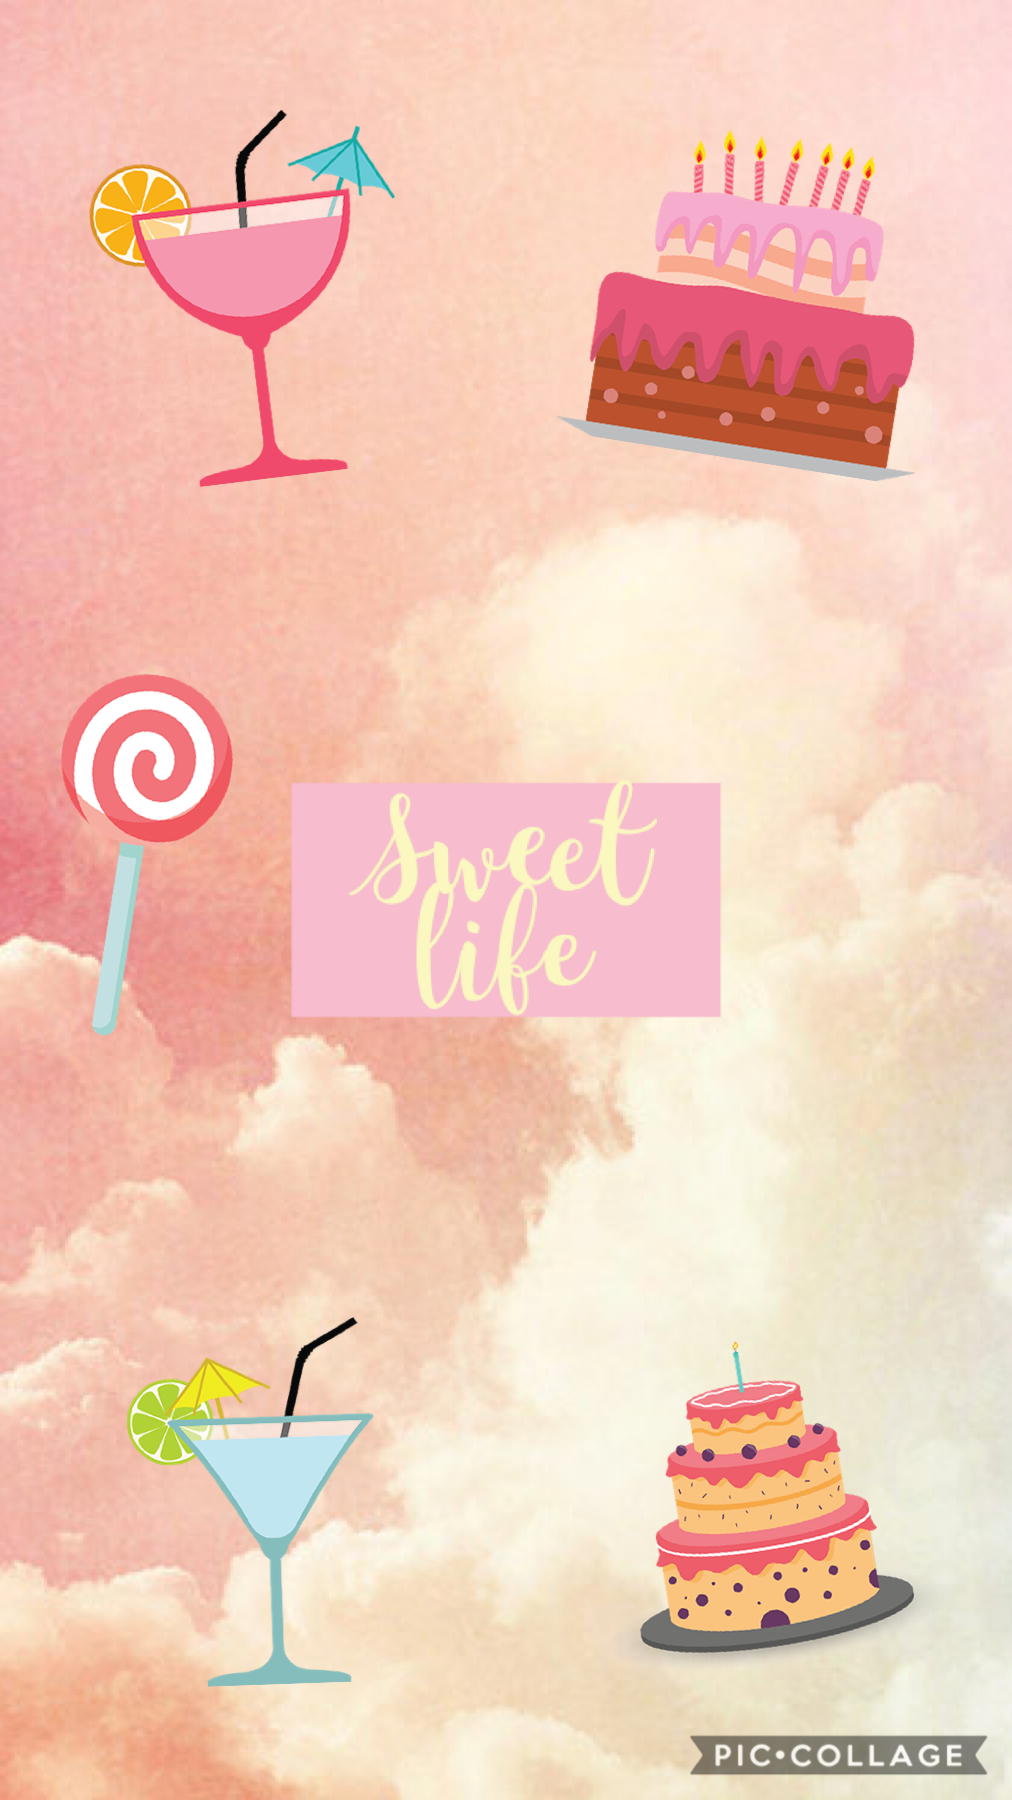 #sweet life